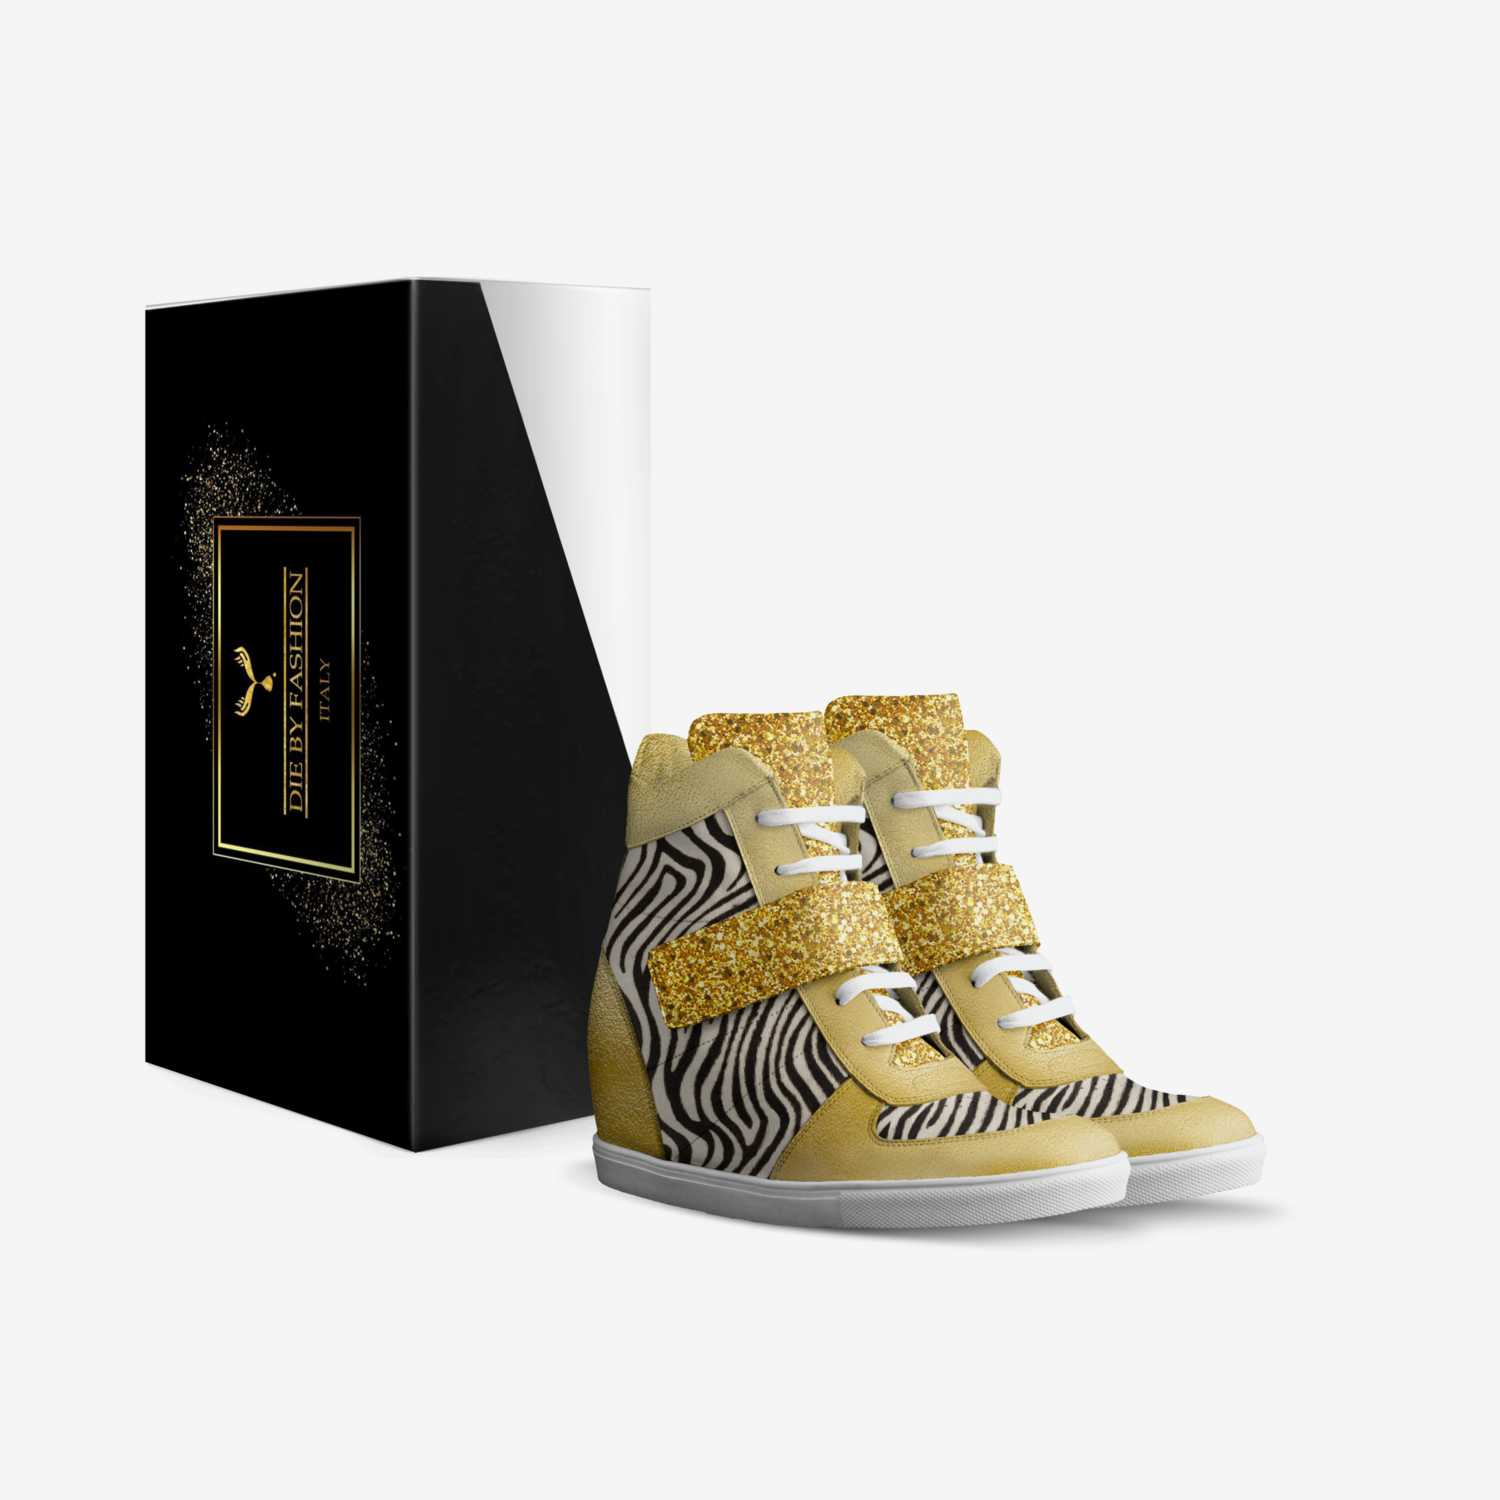 Asphalt Shockwaves custom made in Italy shoes by Rasheeda Socolove | Box view